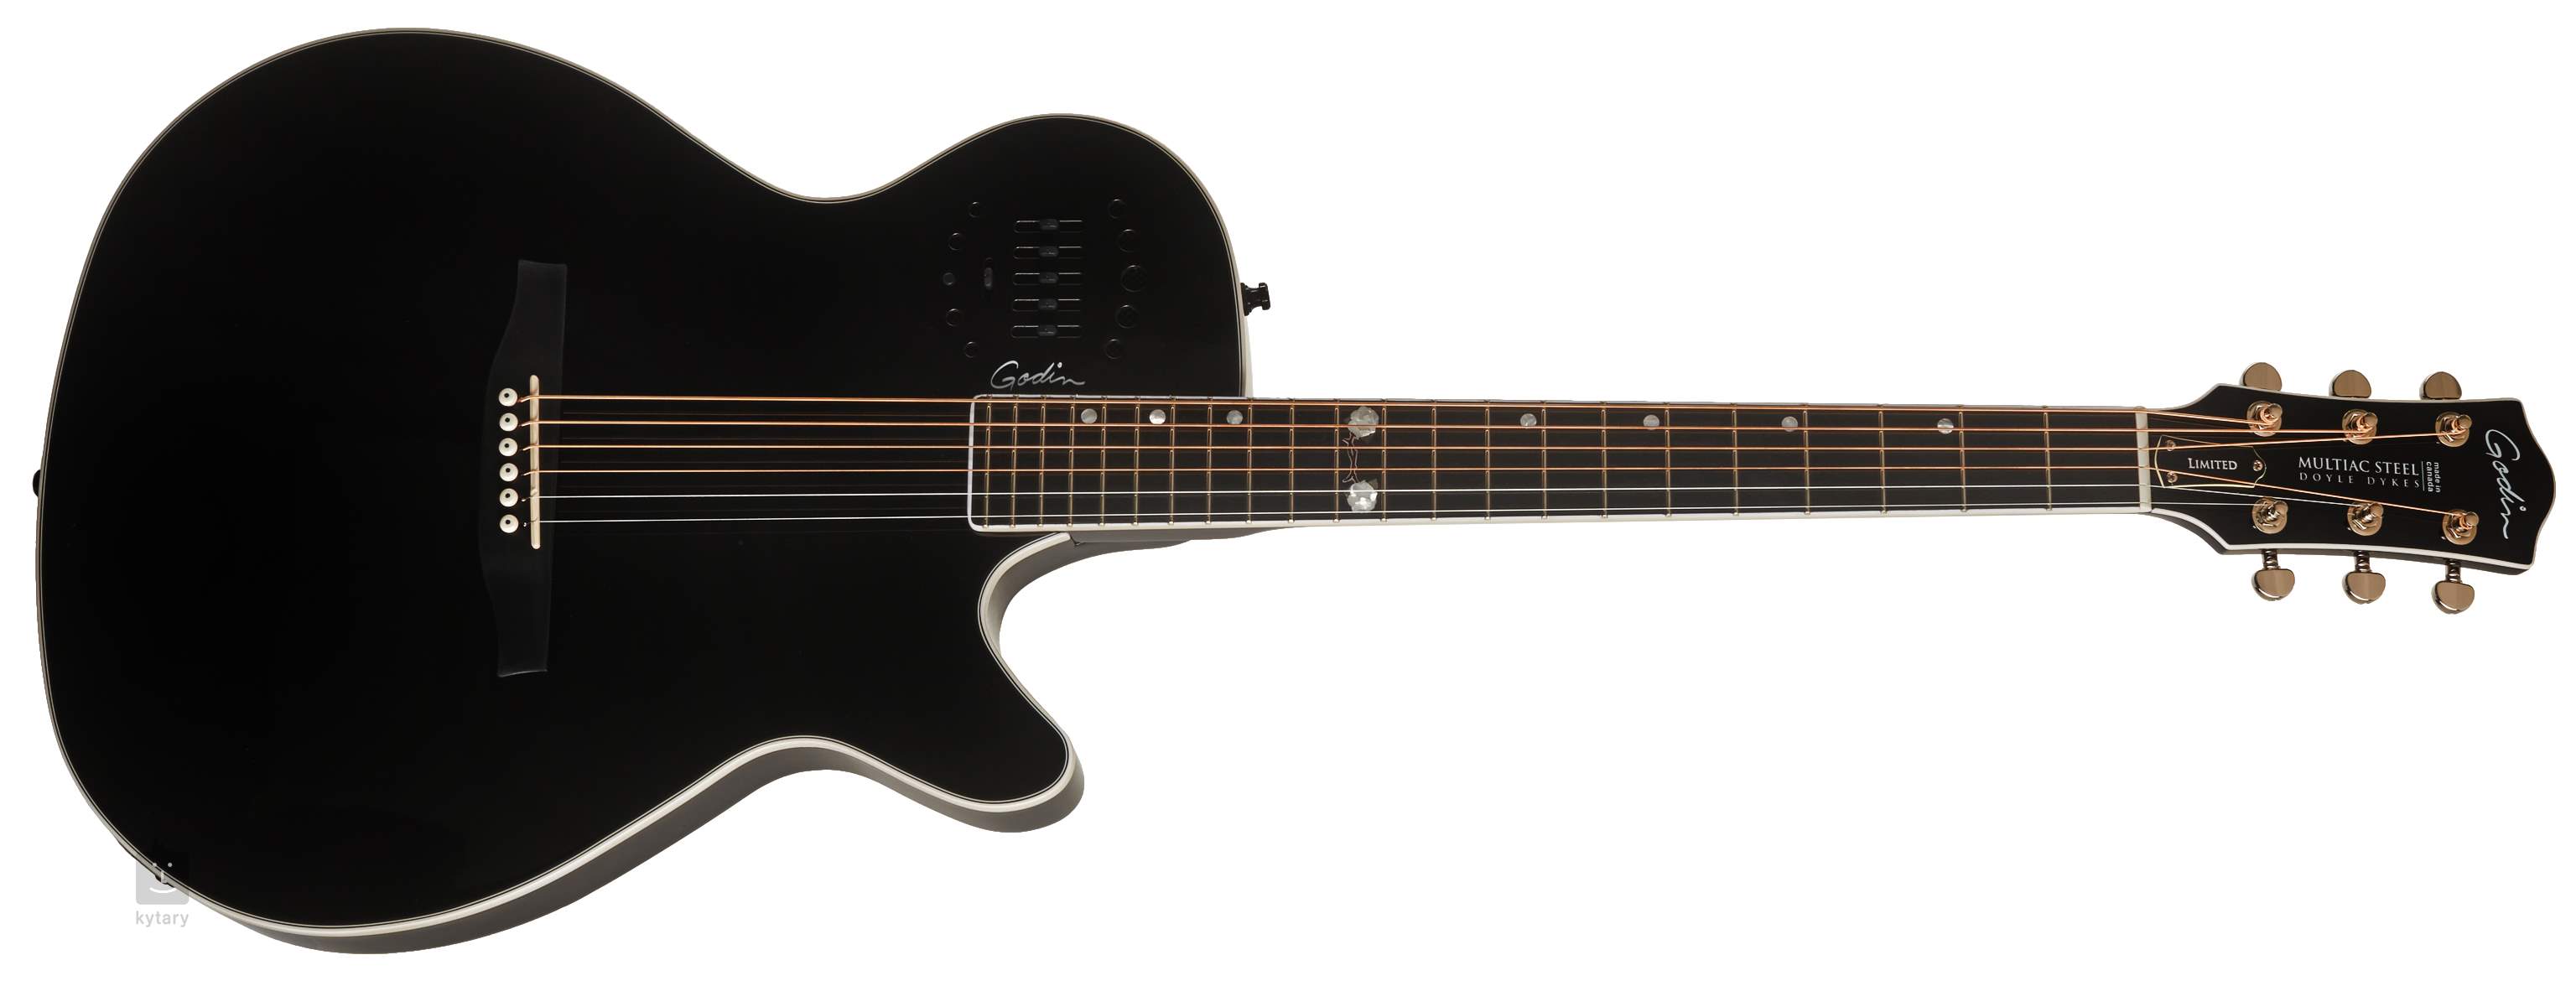 Godin Multiac Steel Doyle Dykes Signature Edition Black Hg Electro Acoustic Hybrid Guitar